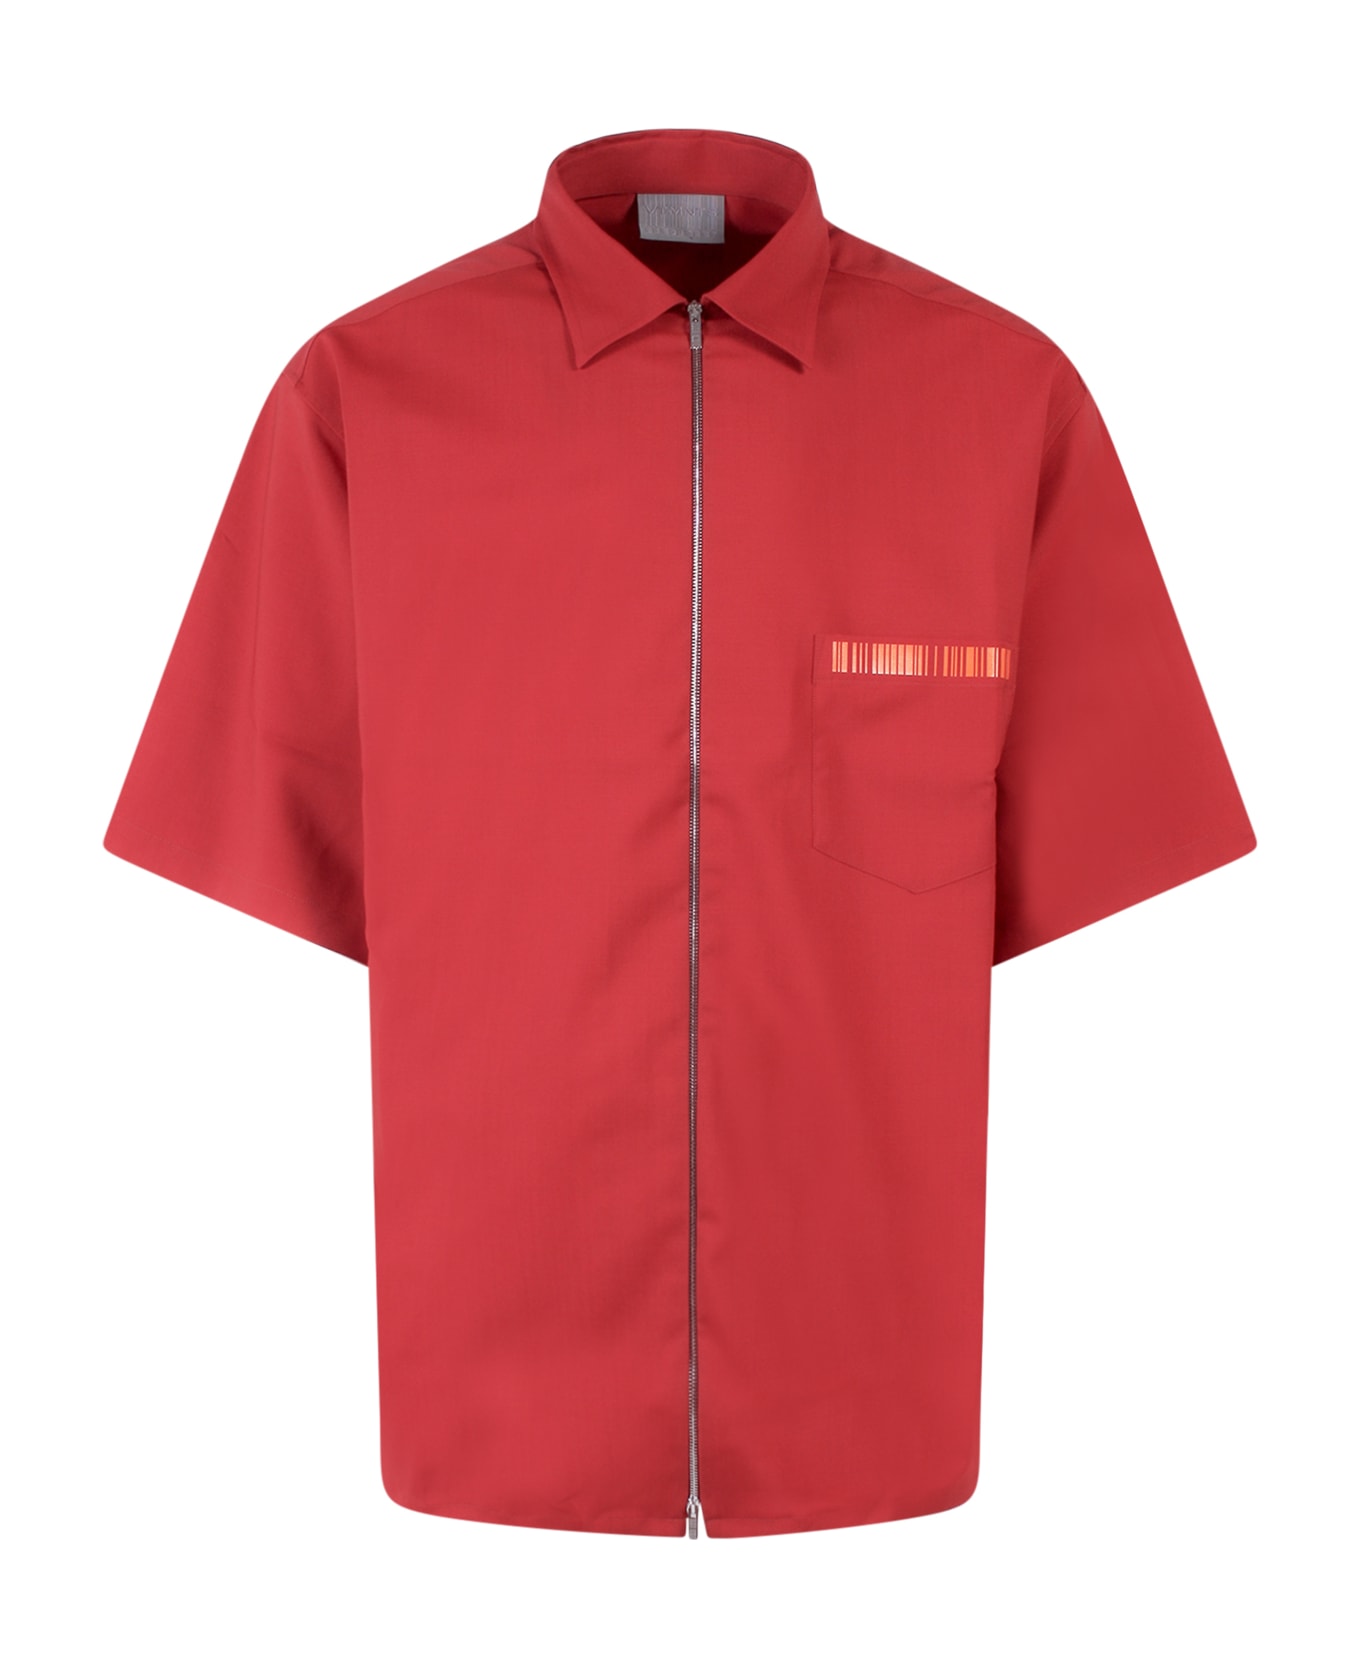 VTMNTS Shirt - Red